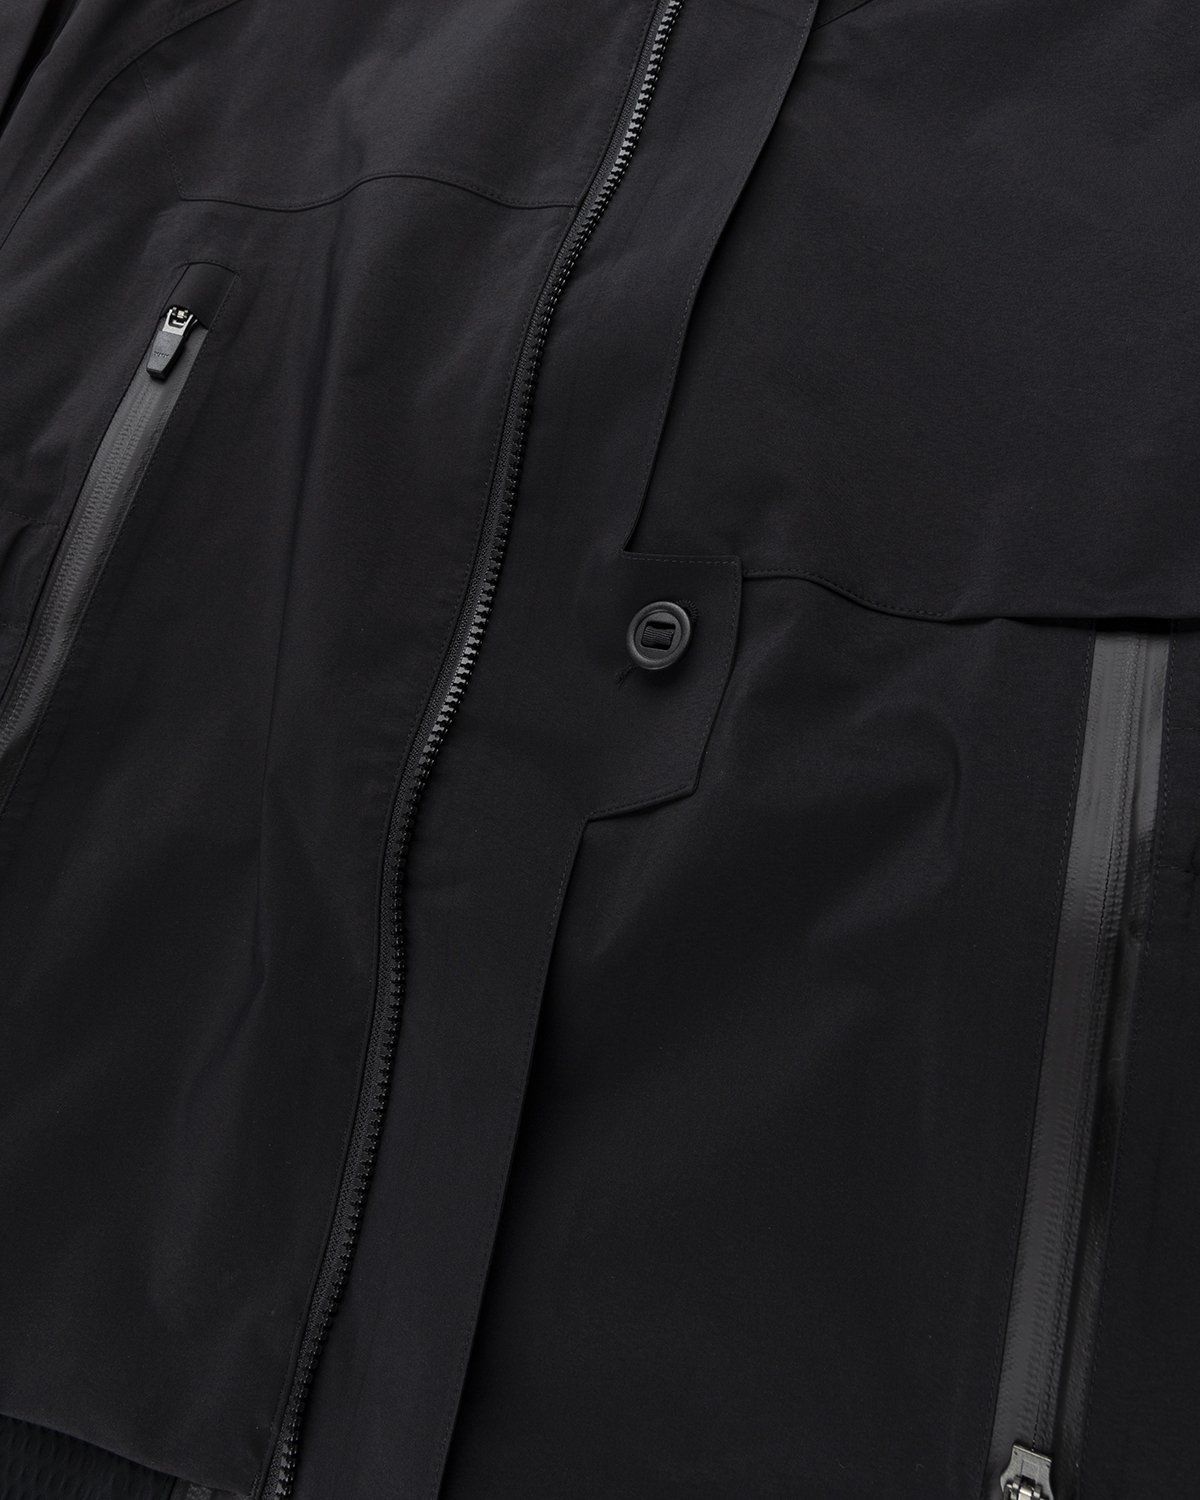 ACRONYM – J16-GT Jacket Black - Outerwear - Black - Image 6